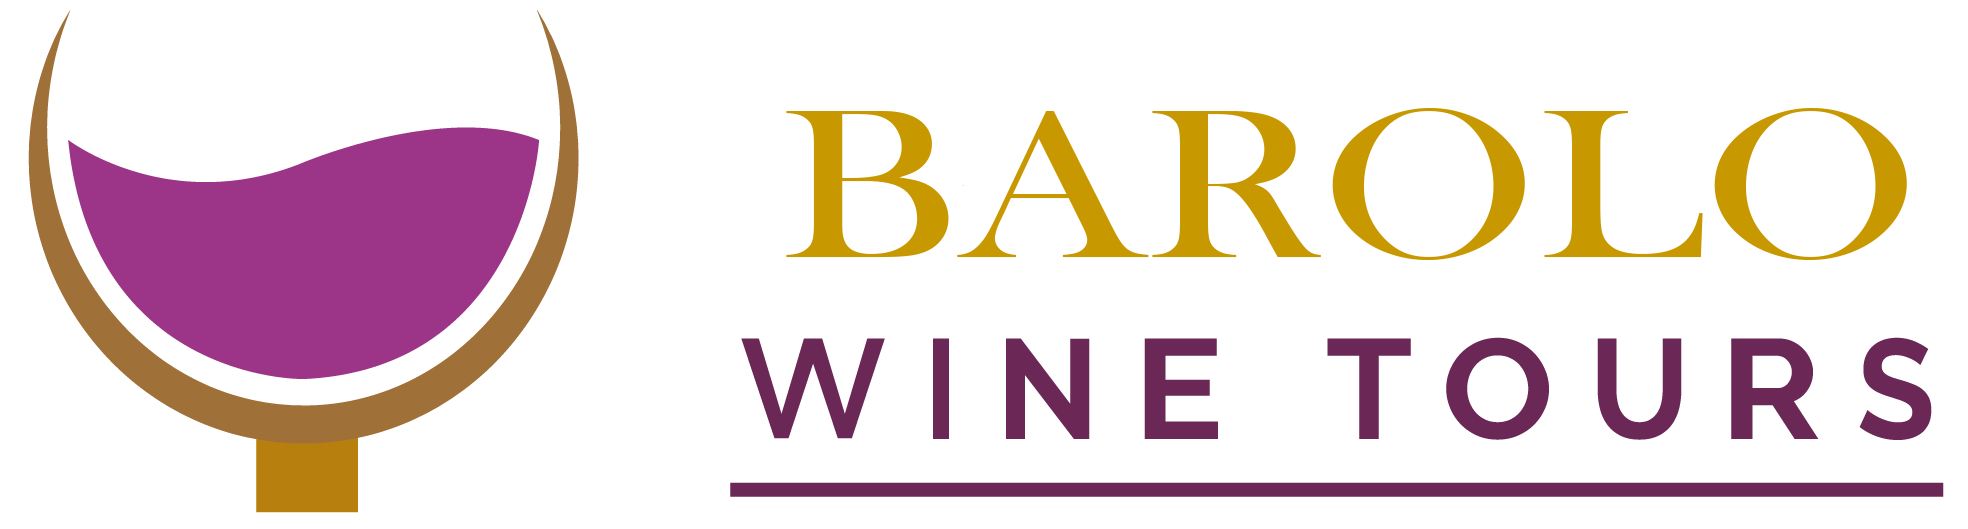 Barolo wine tours